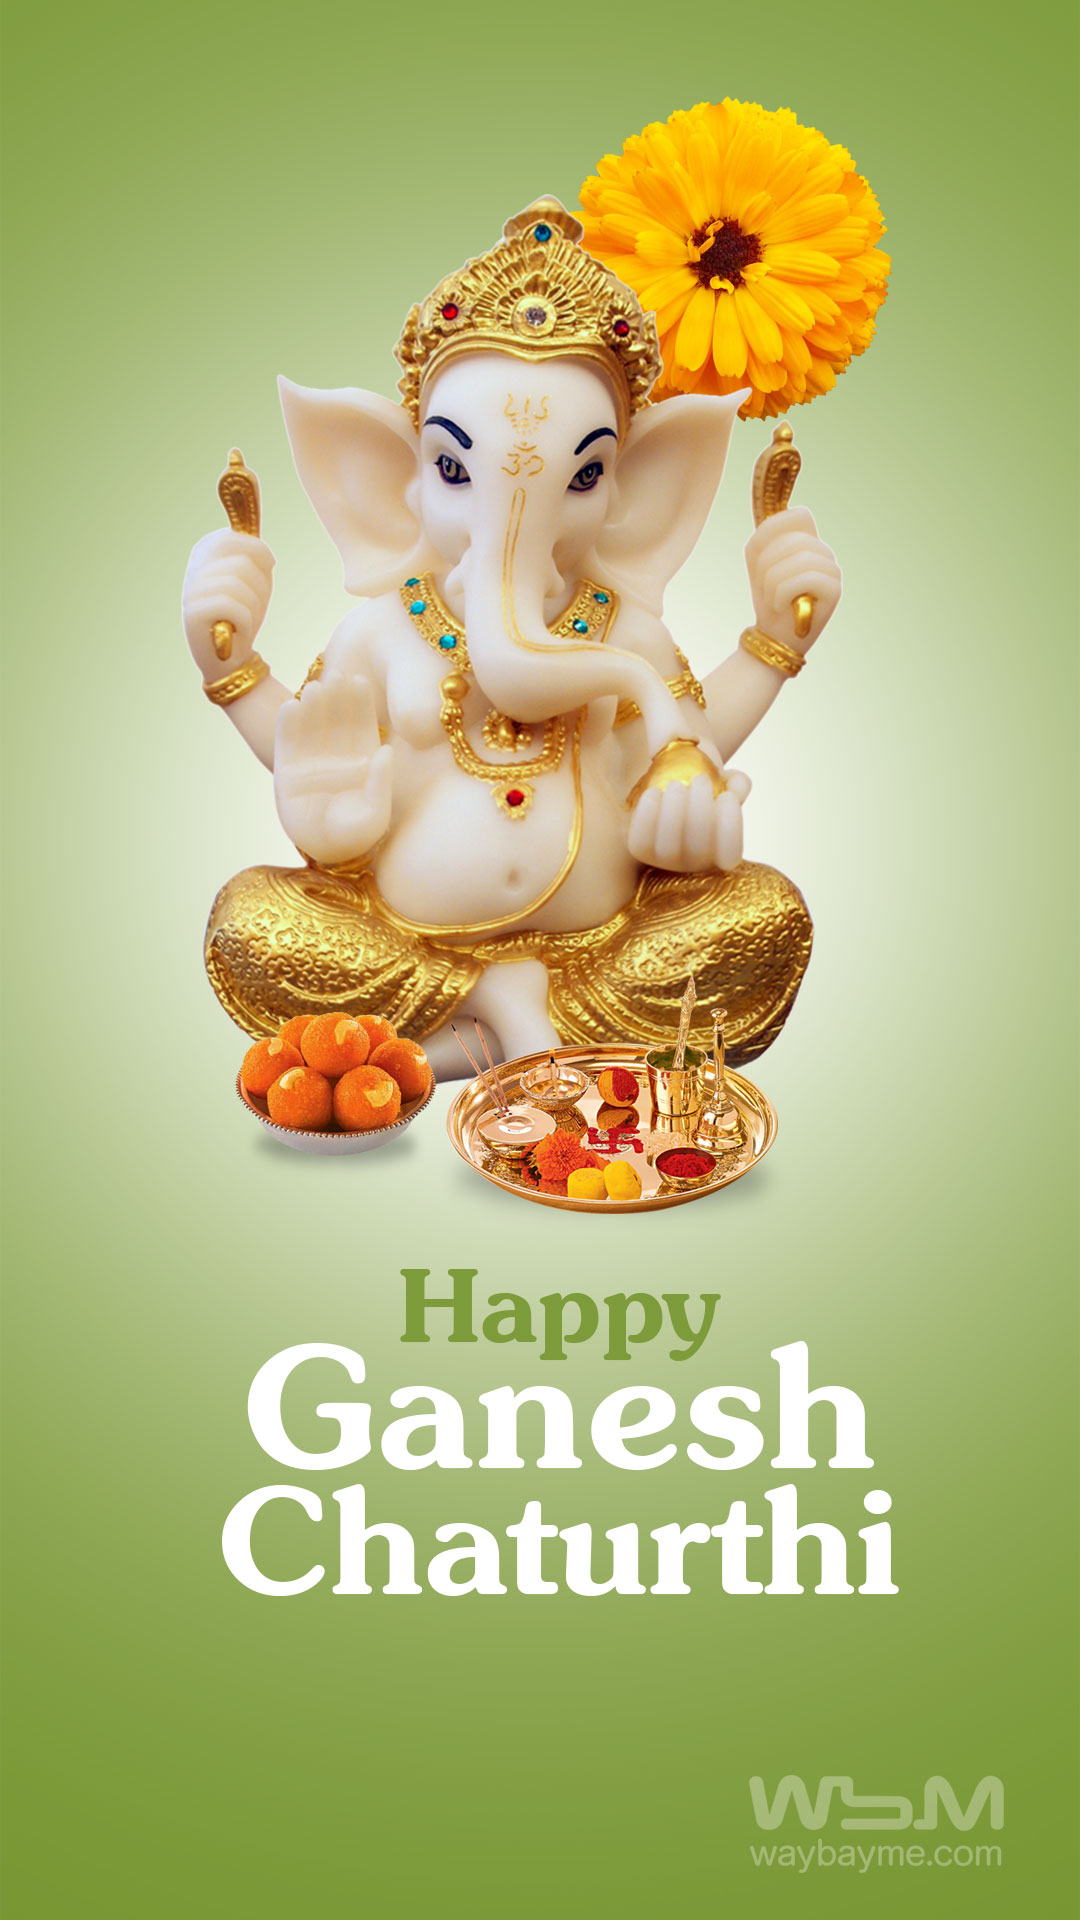 Ganesh Chaturthi, Vinayaka Chaturthi, Happy Ganesh Chaturthi, Happy Vinayaka Chaturthi, Ganesh Utsav, Vinayak Chaturthi Greeting Card, Ganesh Chaturthi Greeting Cards, Lord Ganesh, Vikhnesh, Jai Ganesh